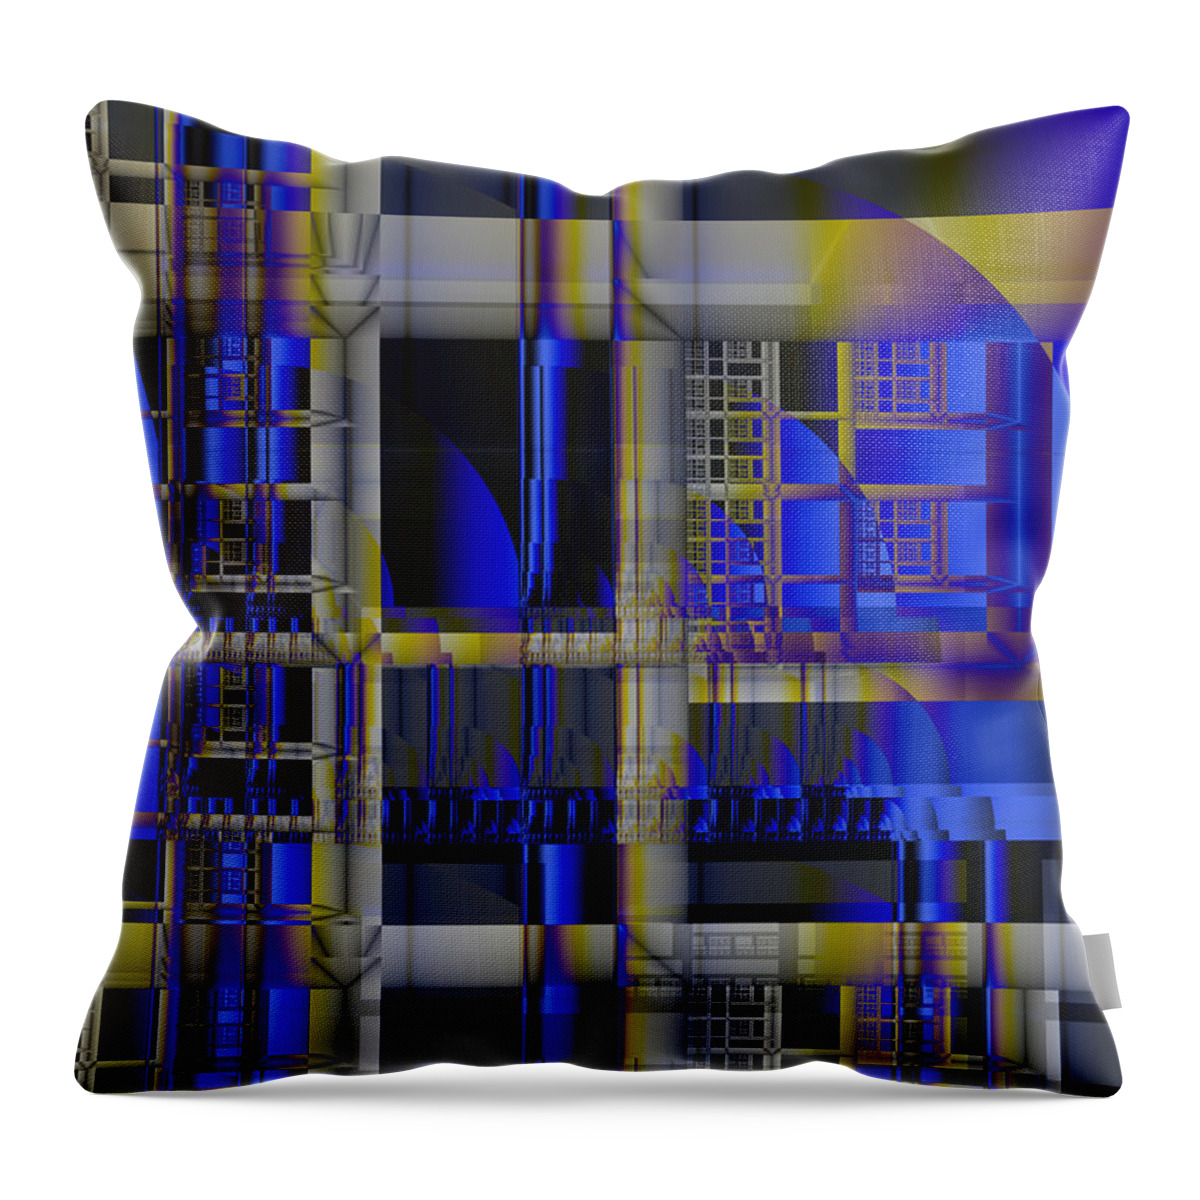  Throw Pillow featuring the digital art Scaffold II by Richard Ortolano